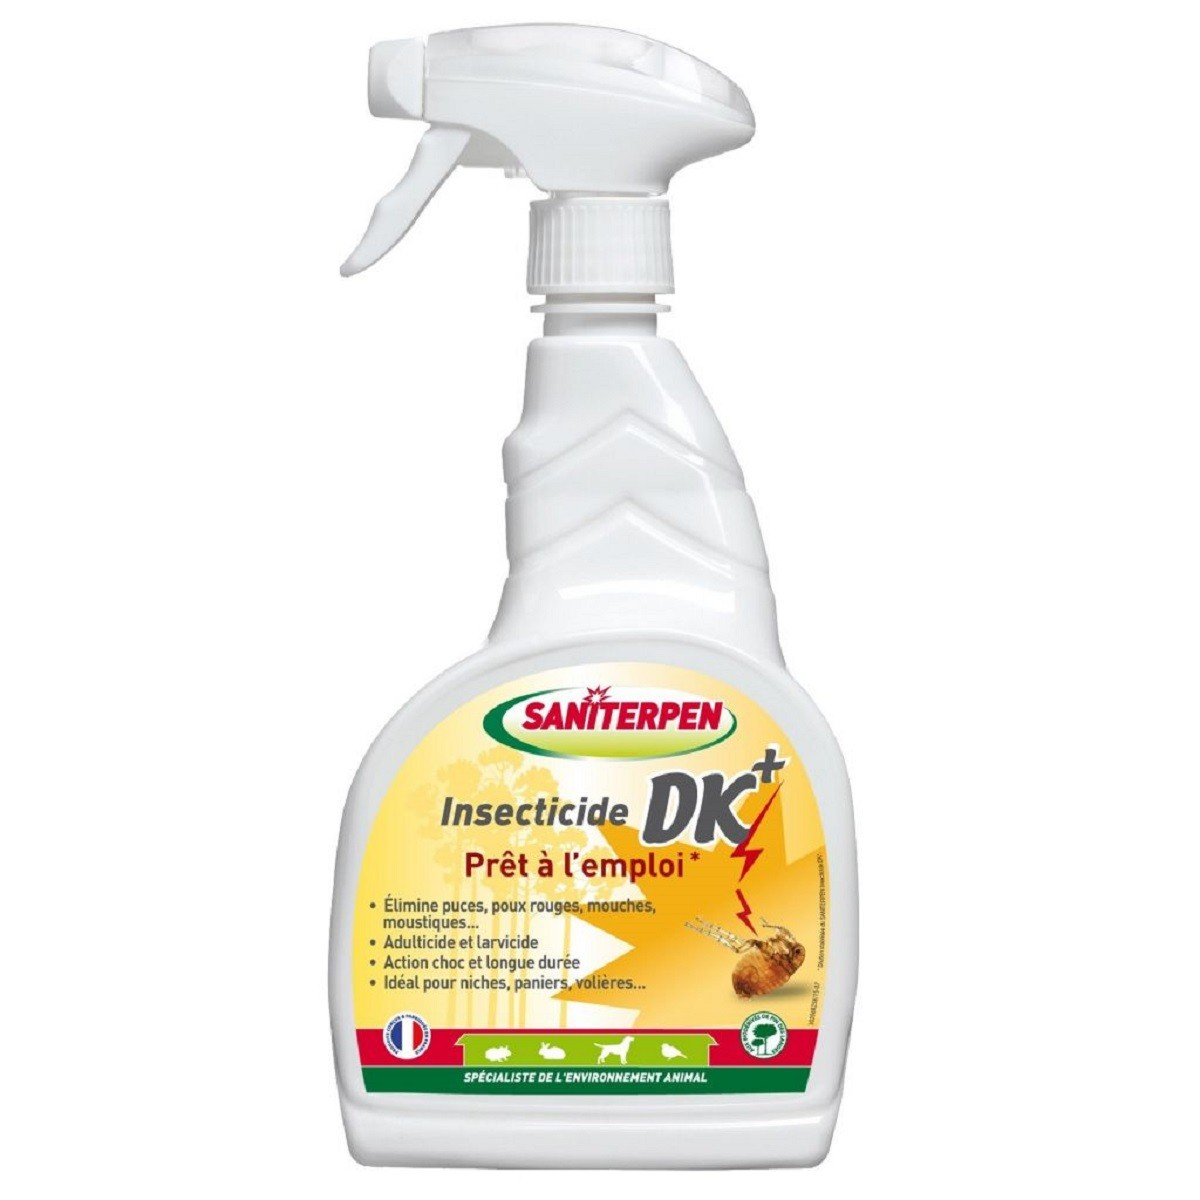 Insecticide DK Choc prêt à l'emploi Saniterpen - Spray 750 ml